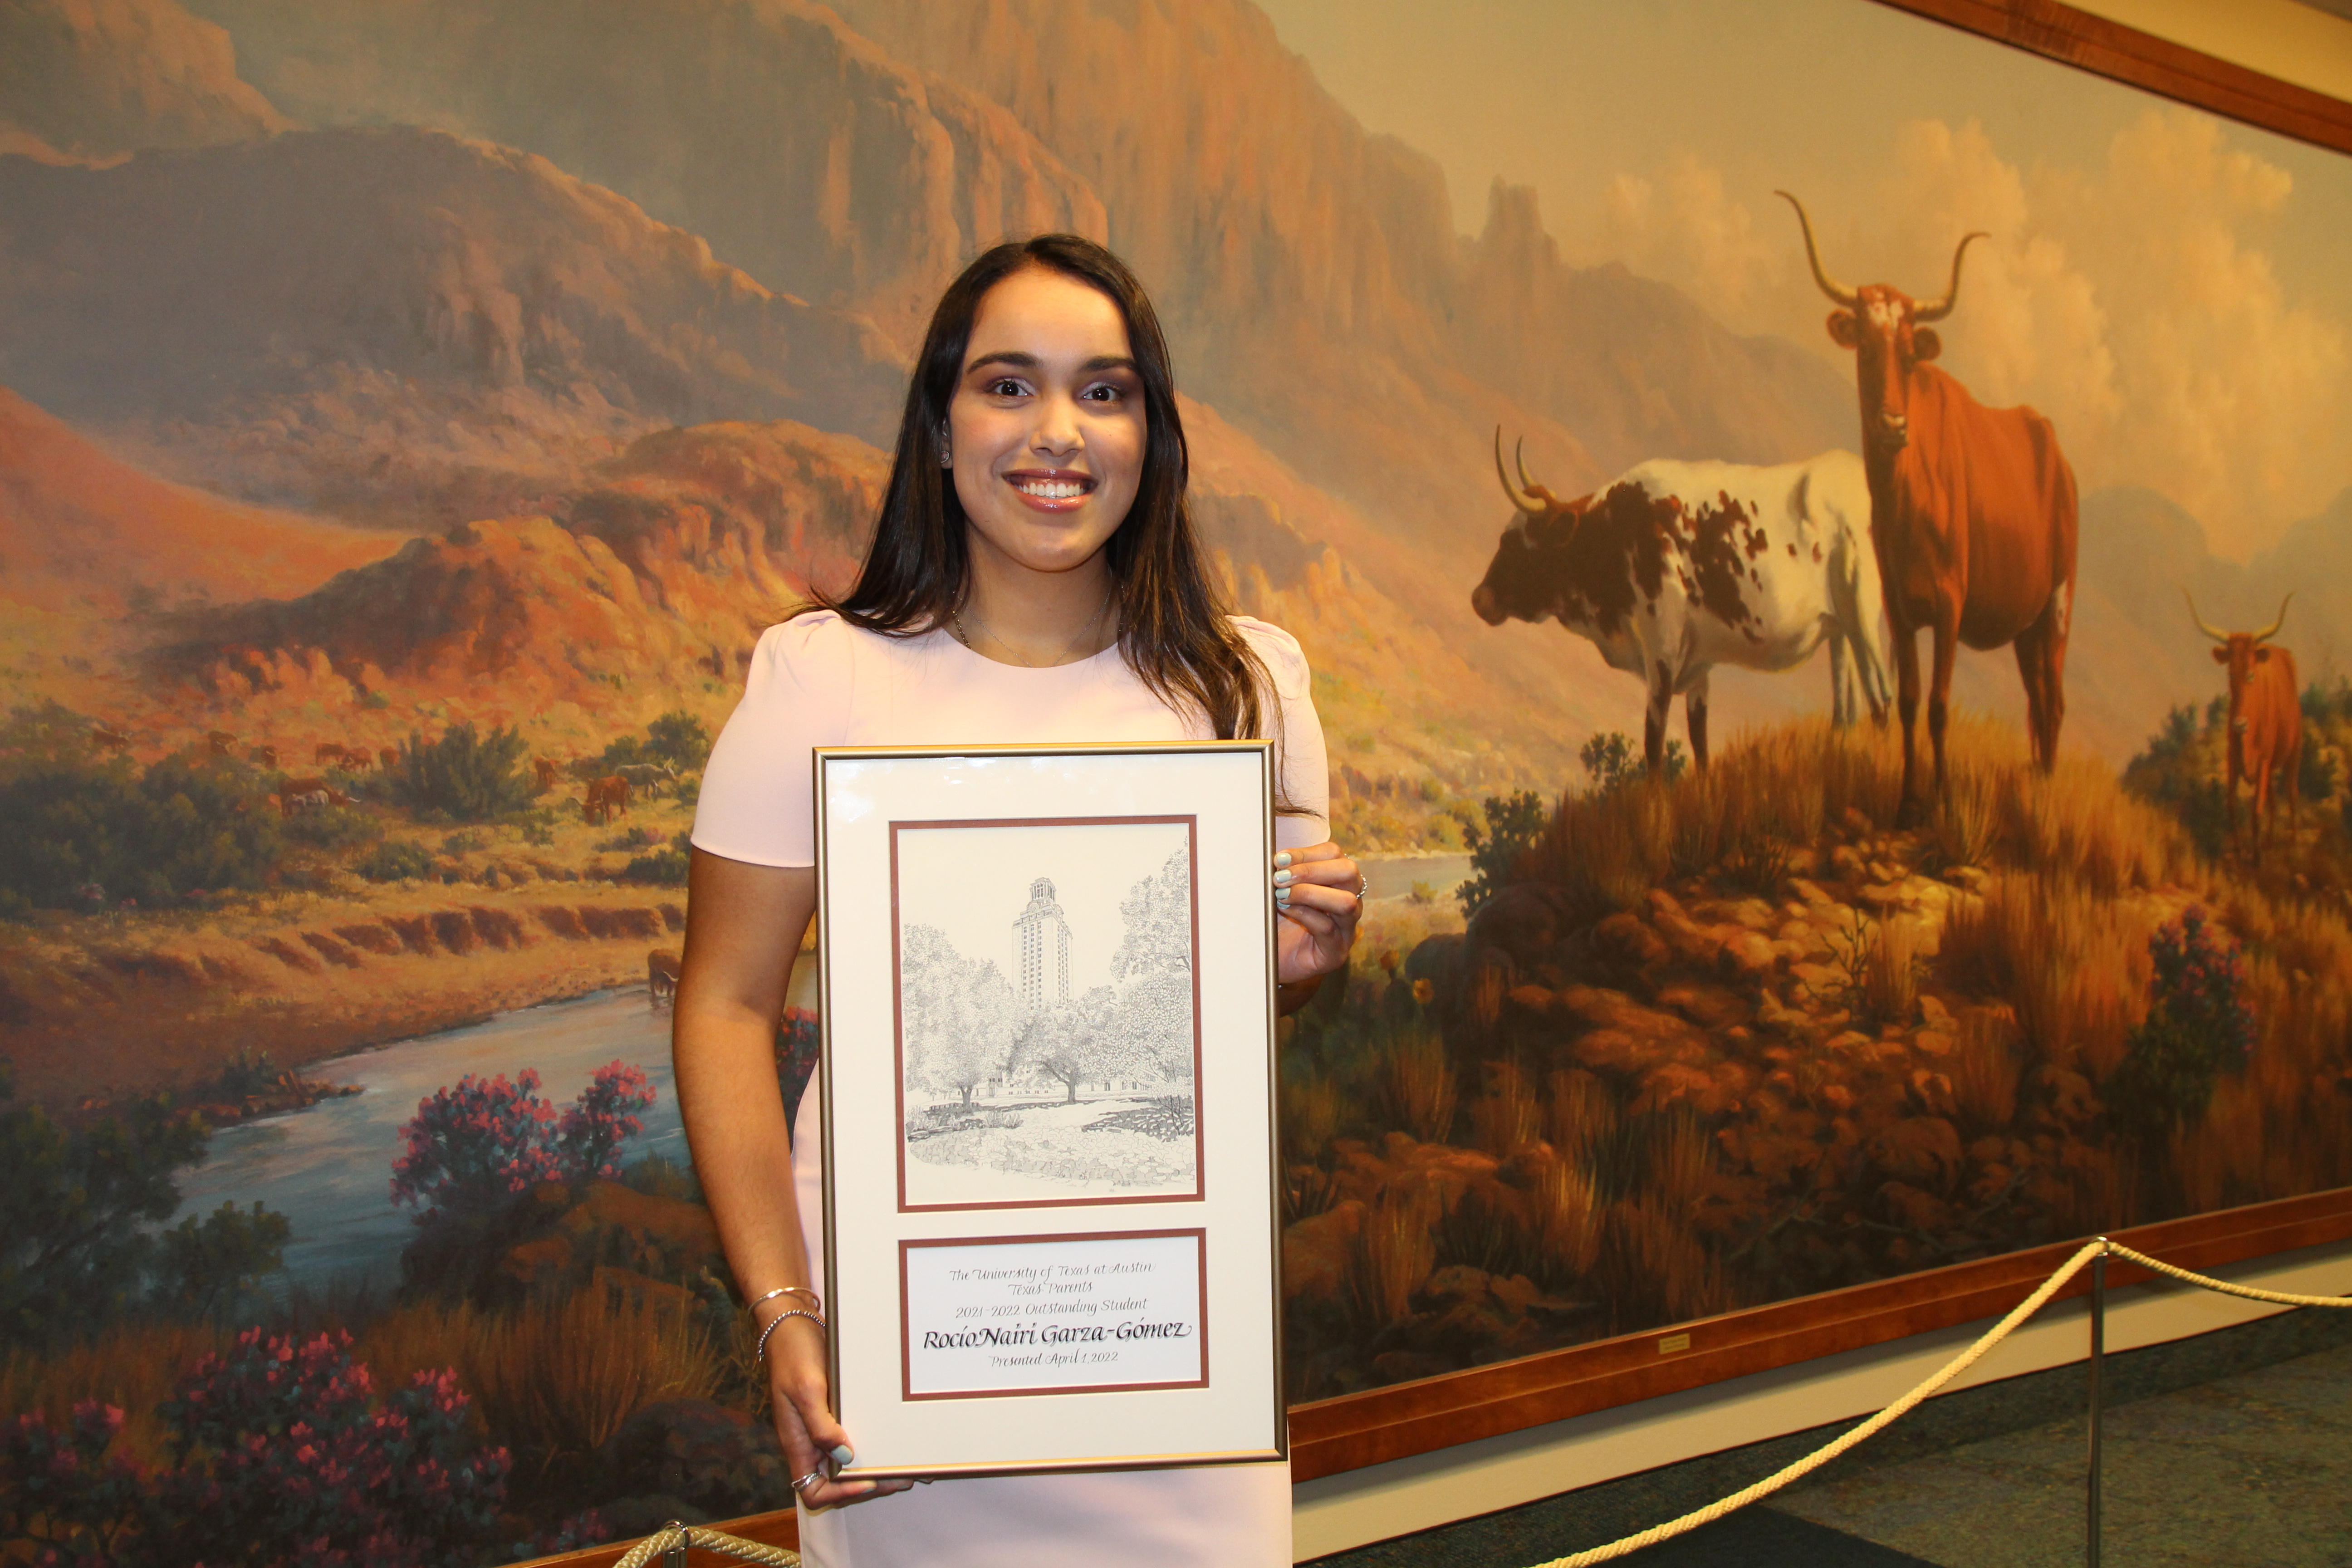 Photo of 2021-22 Outstanding Student Award Winner Rocío Nairi Garza-Gómez holding framed certificate